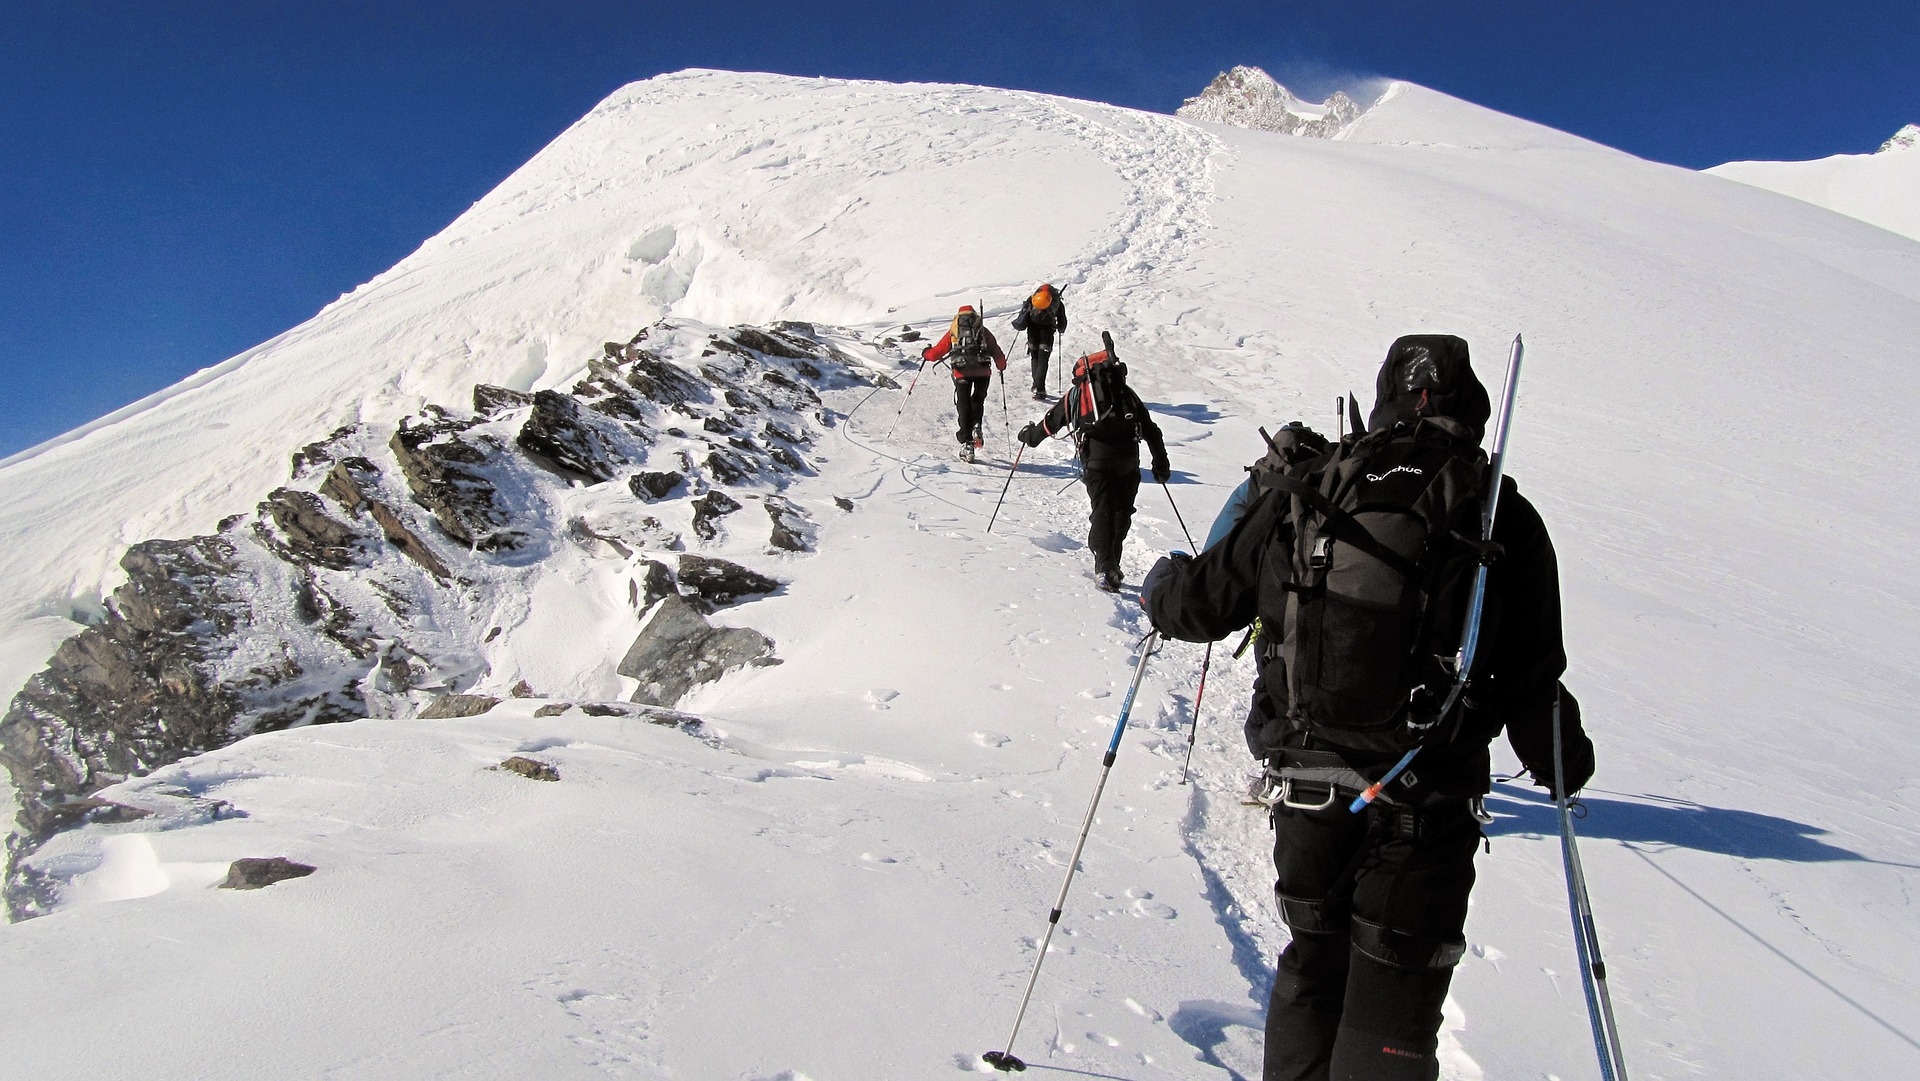 Baruntse Expedition with Mera Peak Climbing